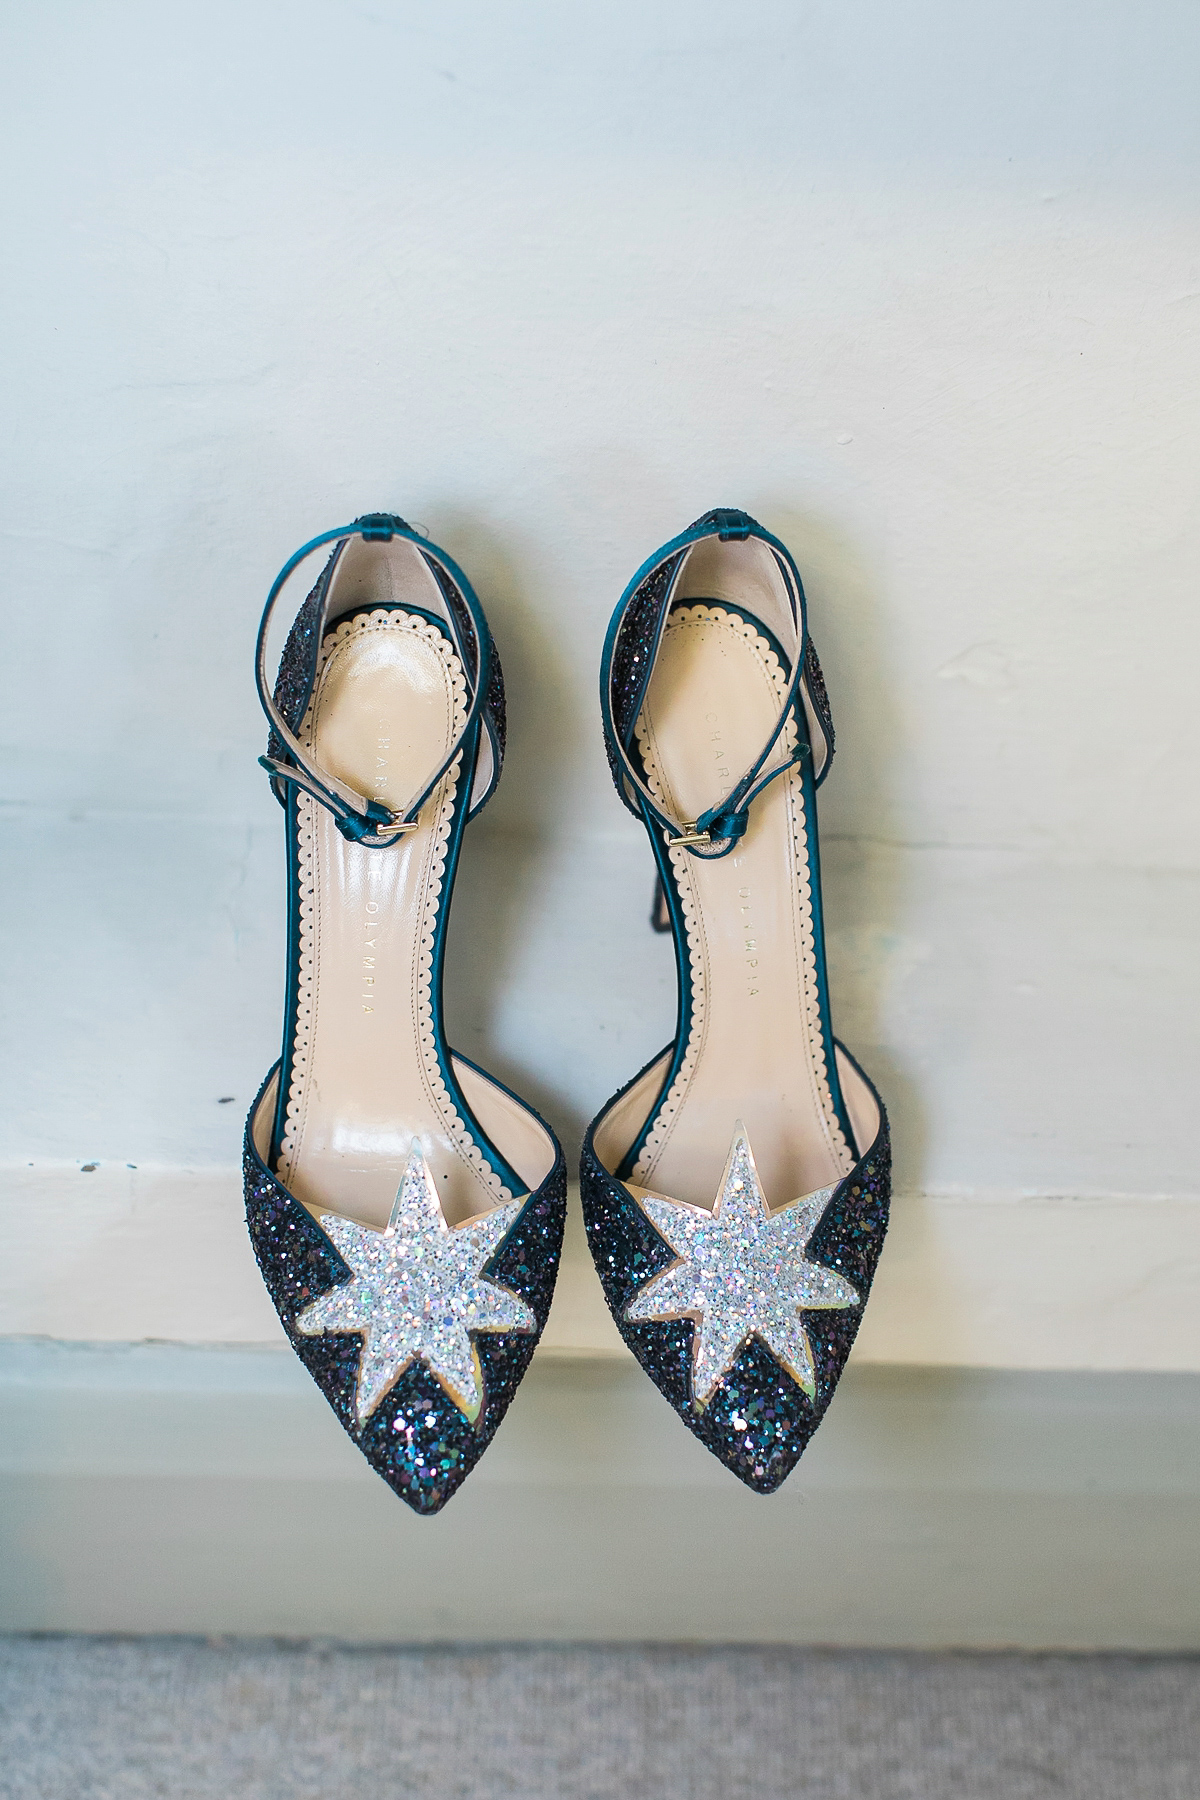 blue wedding dress charlotte olympia star shoes 21 1